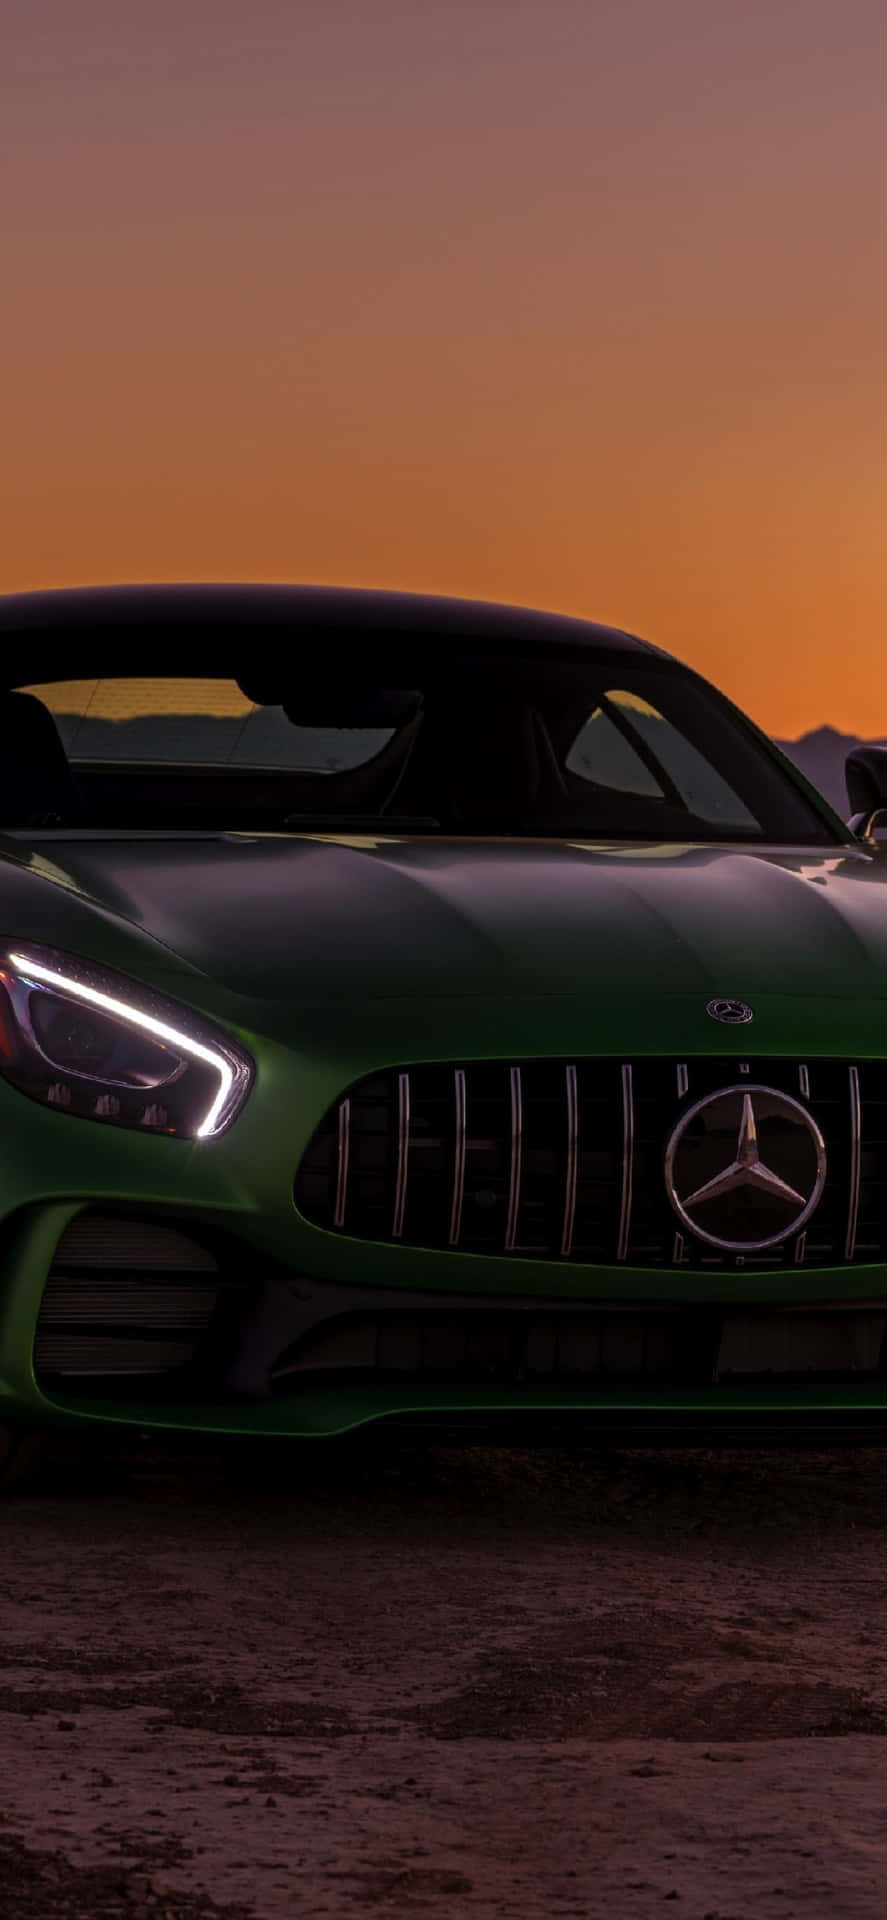 Grünesiphone Xs Mercedes Amg Hintergrundbild Während Des Sonnenuntergangs